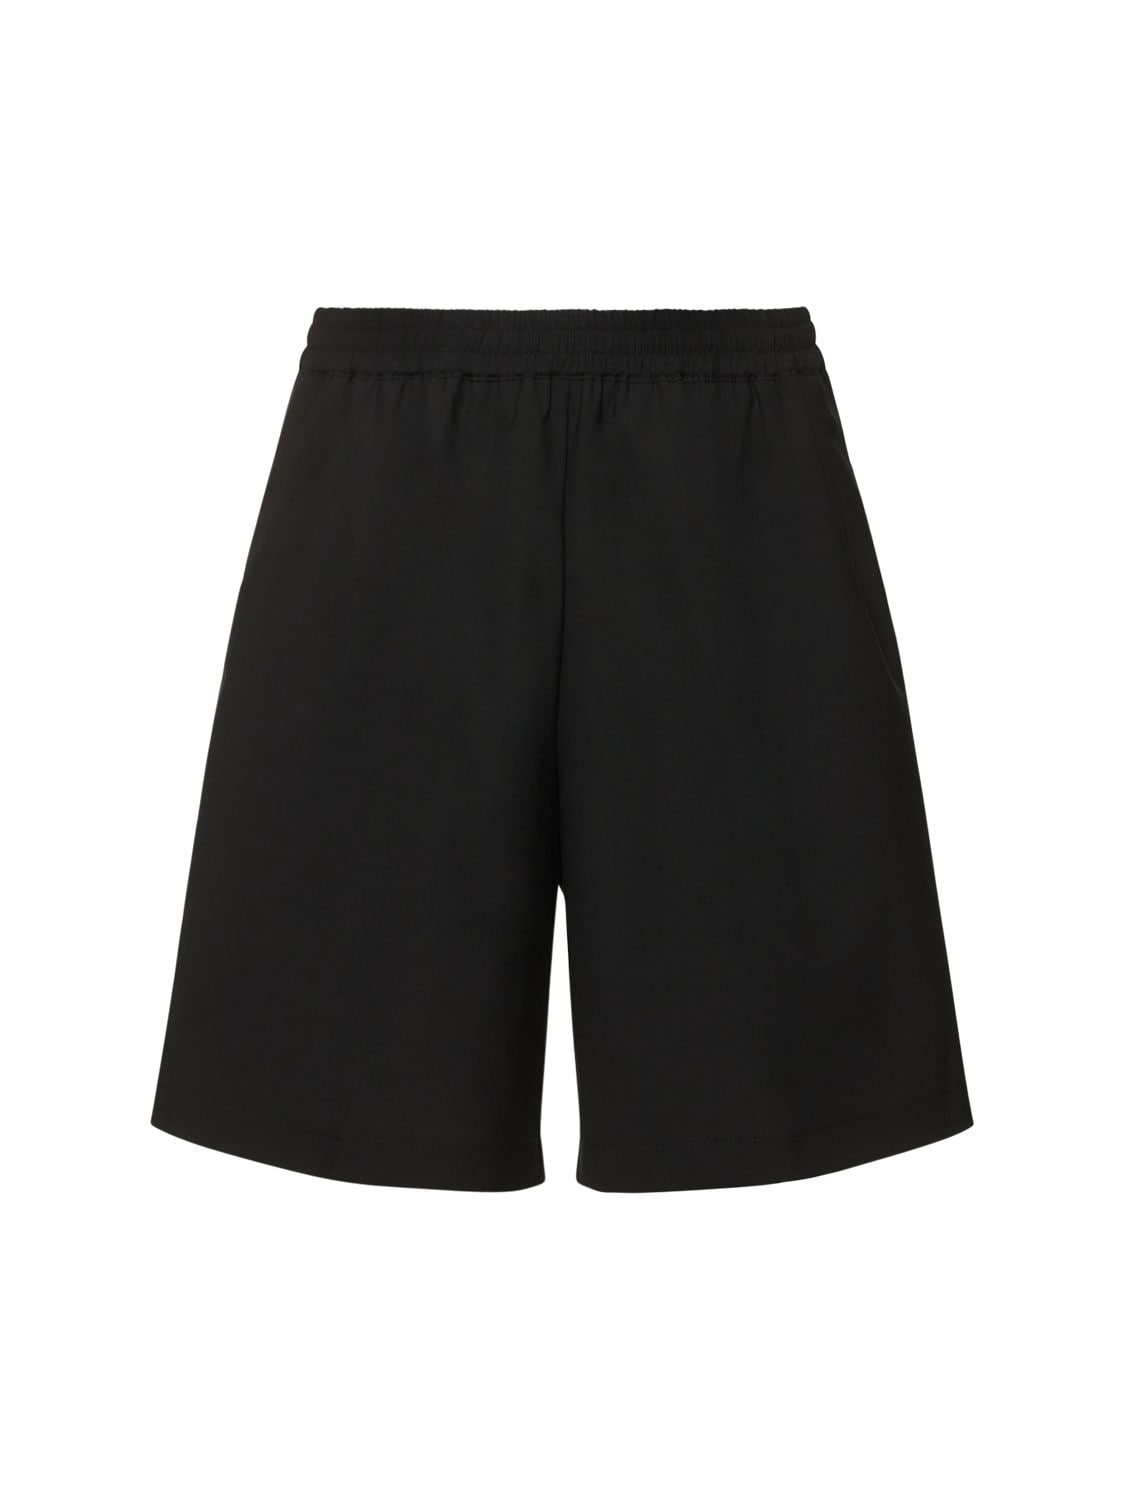 Bonsai: Beige Branding Shorts